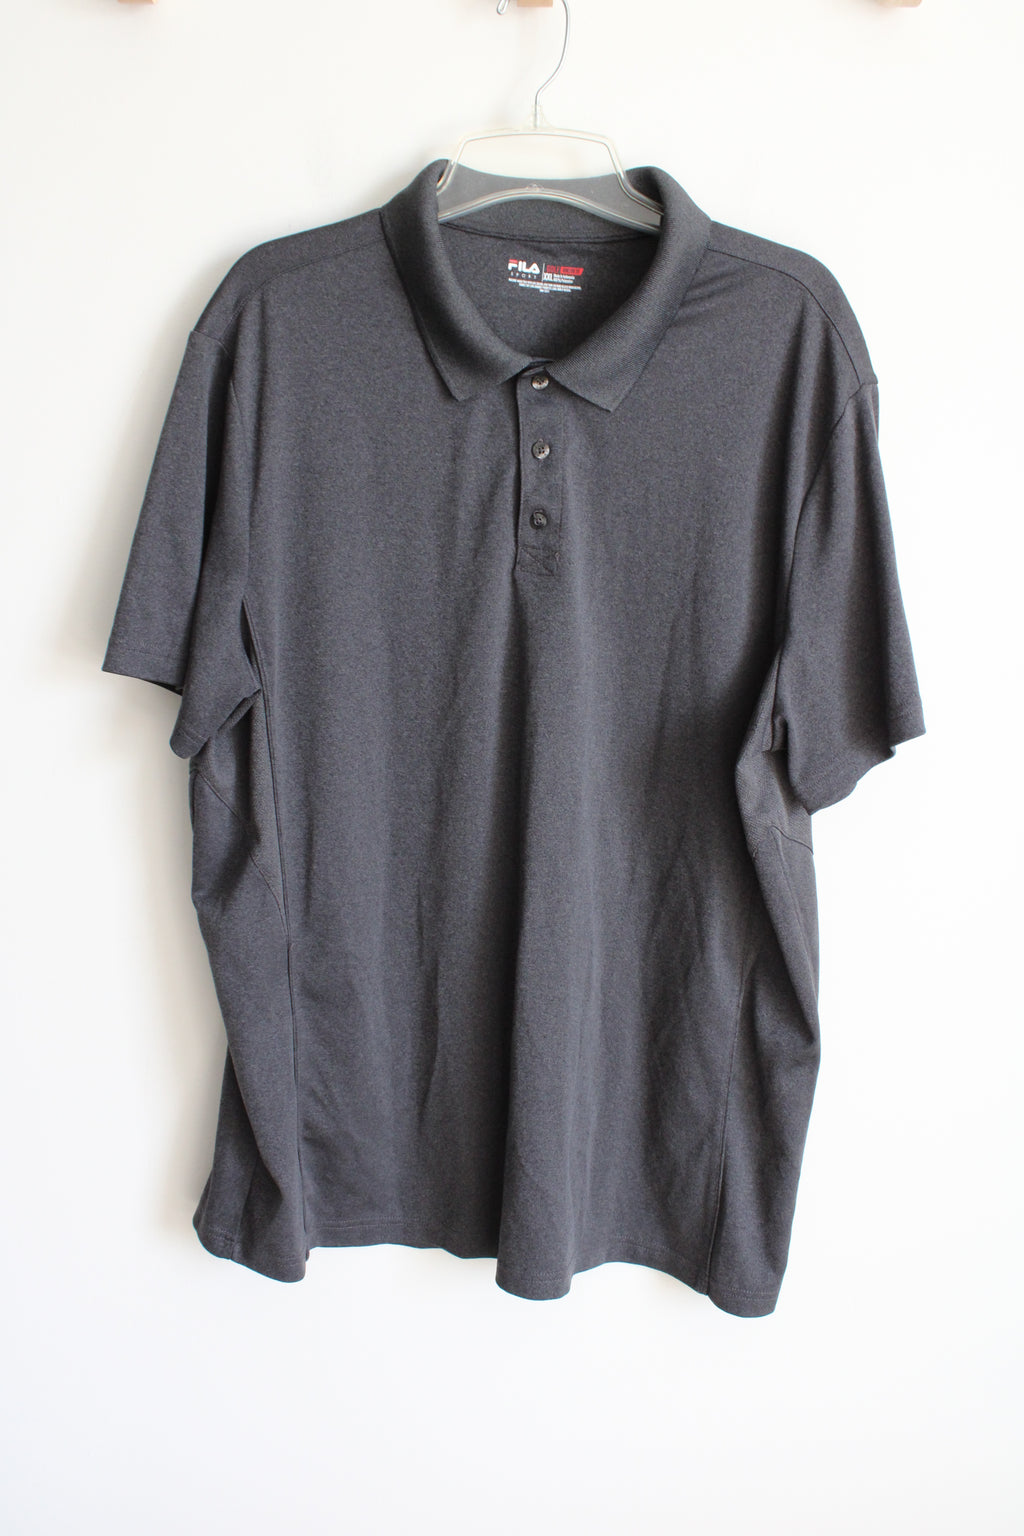 Fila Golf Gray Polo Athletic Fit Shirt | XXL